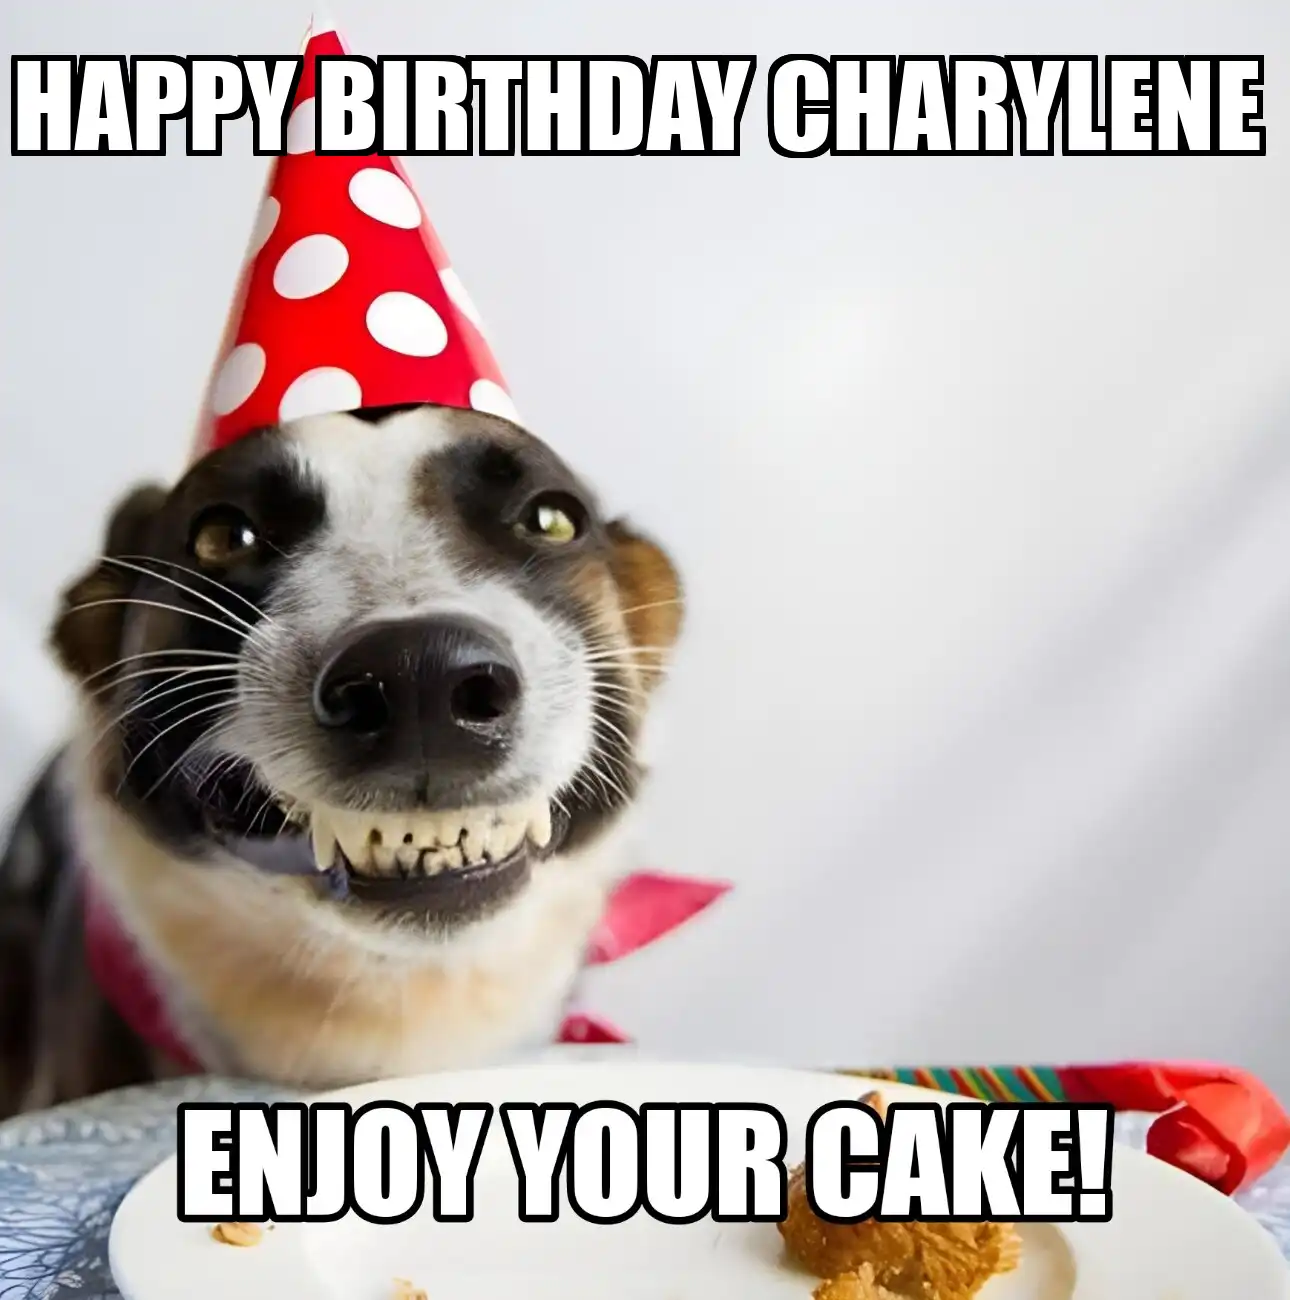 Happy Birthday Charylene Enjoy Your Cake Dog Meme